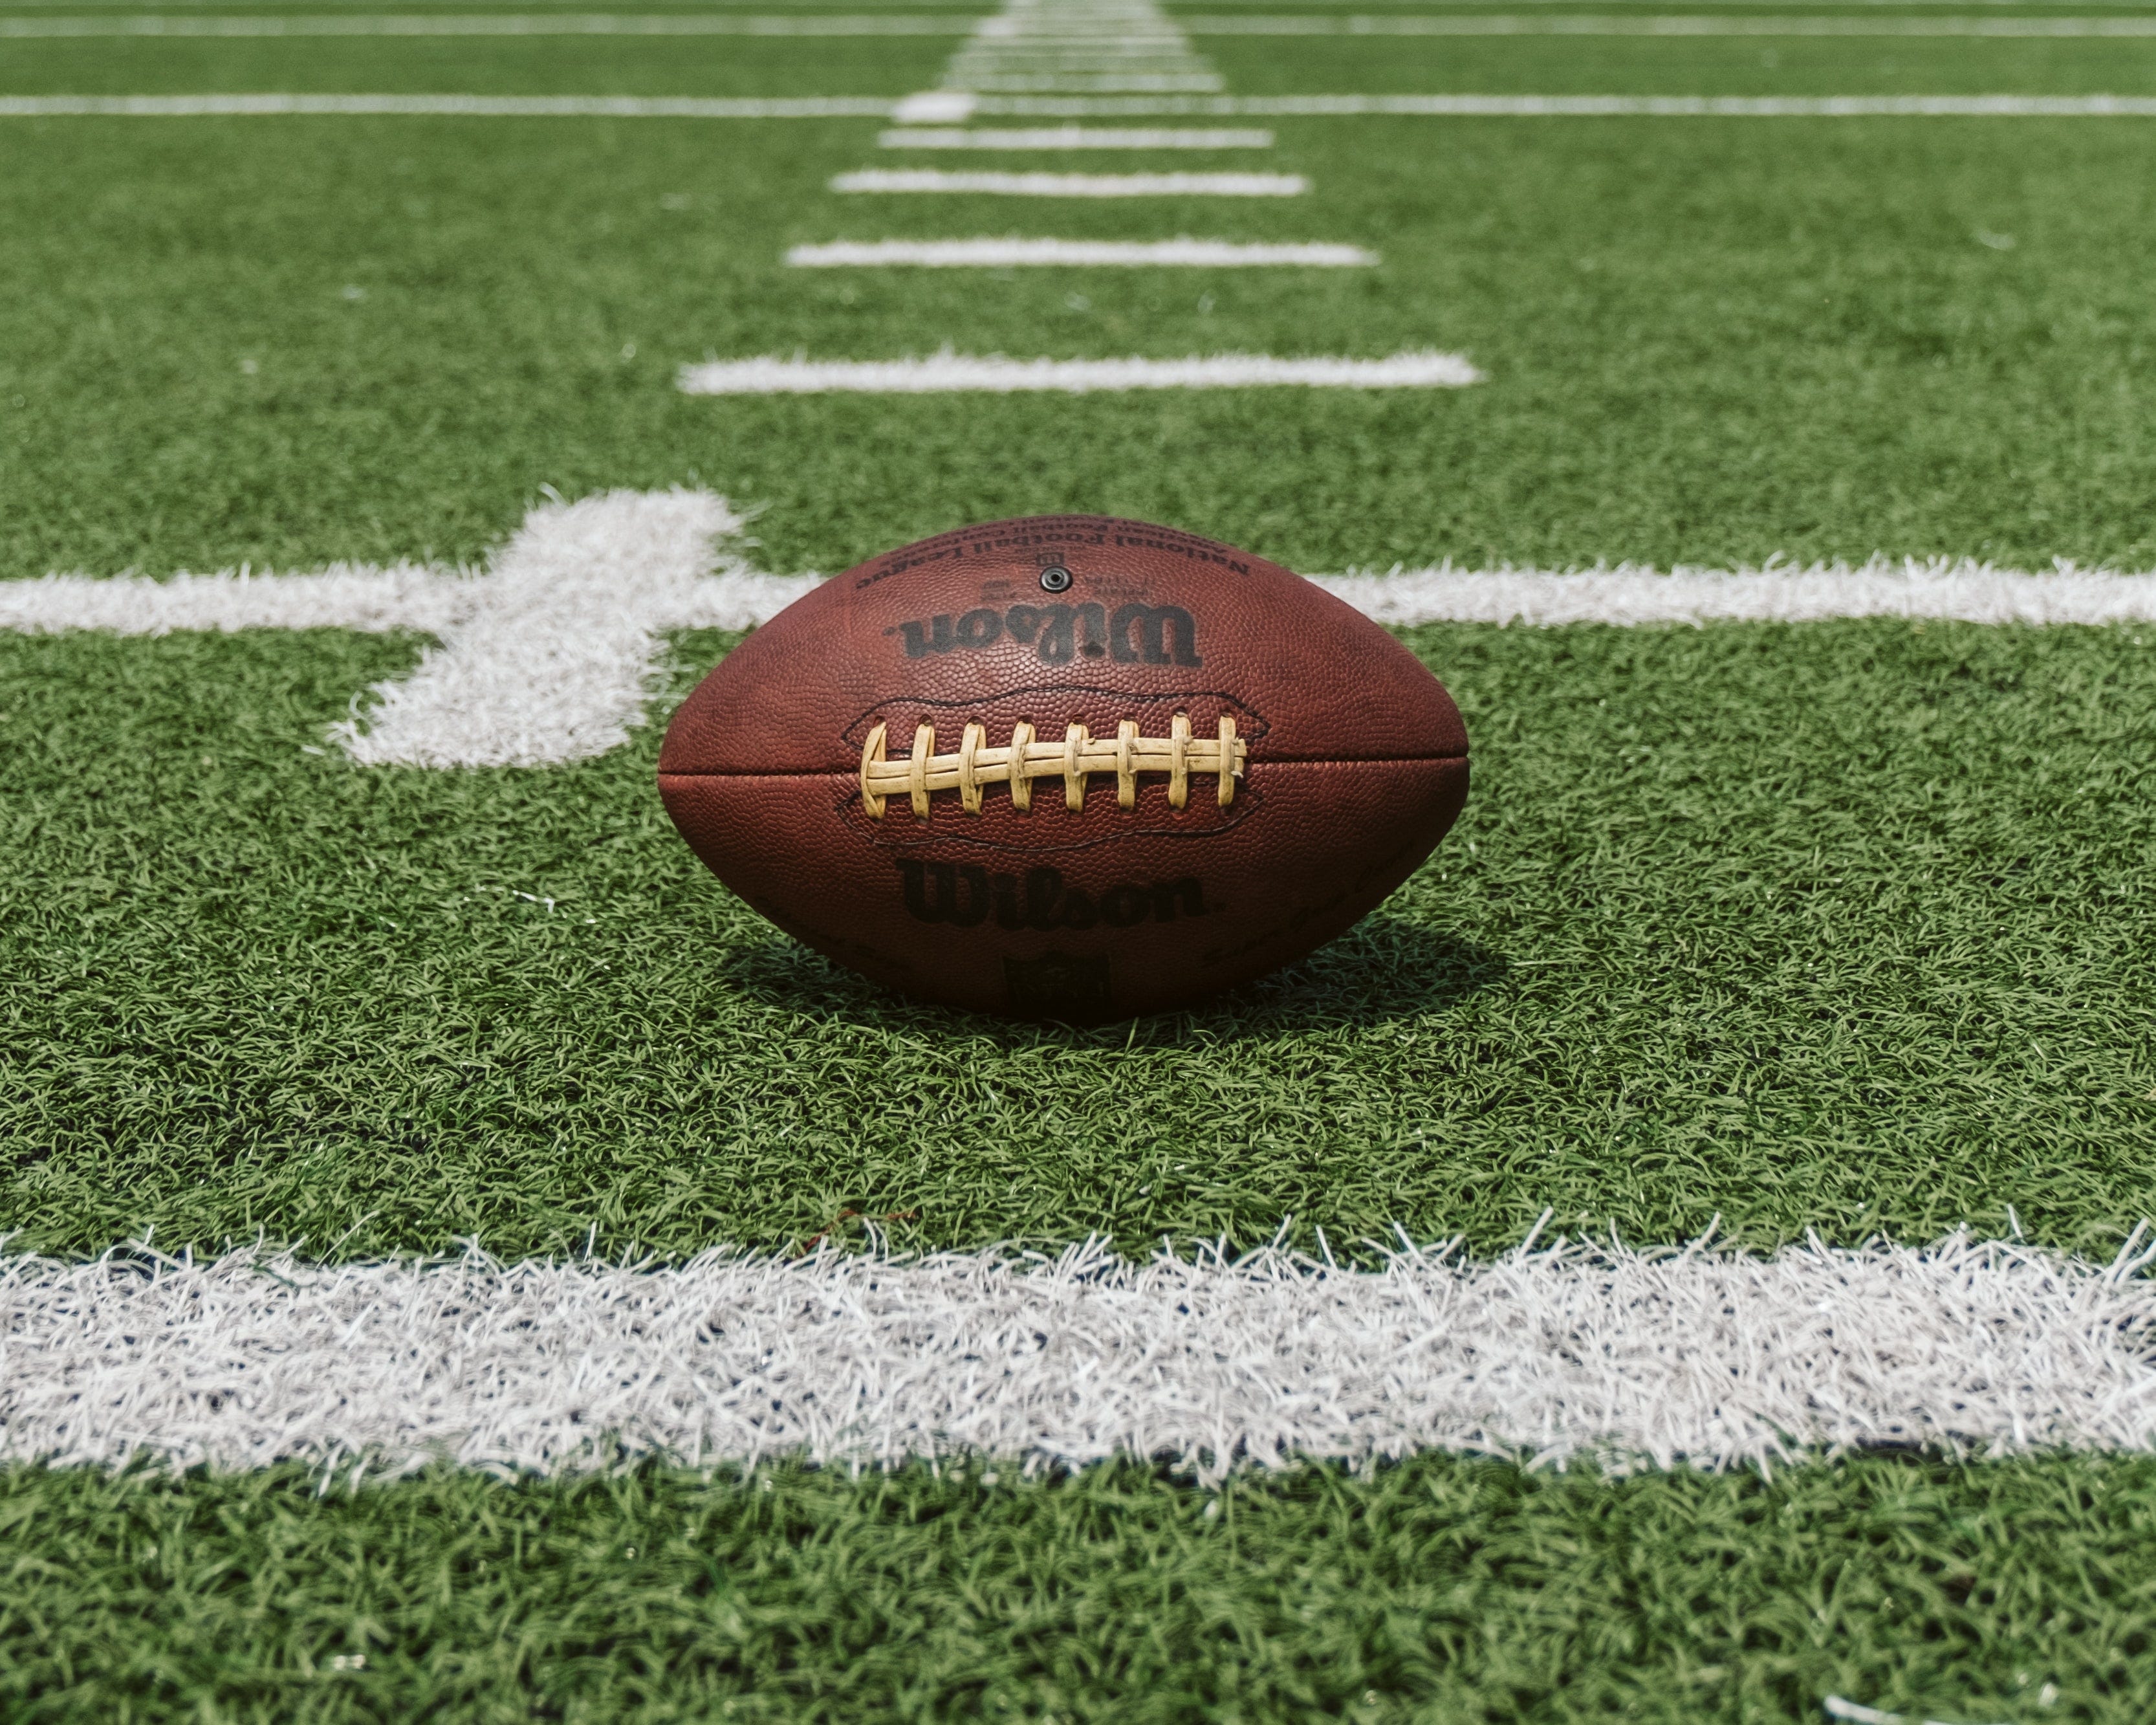 A closeup of a football on the grass of a football field